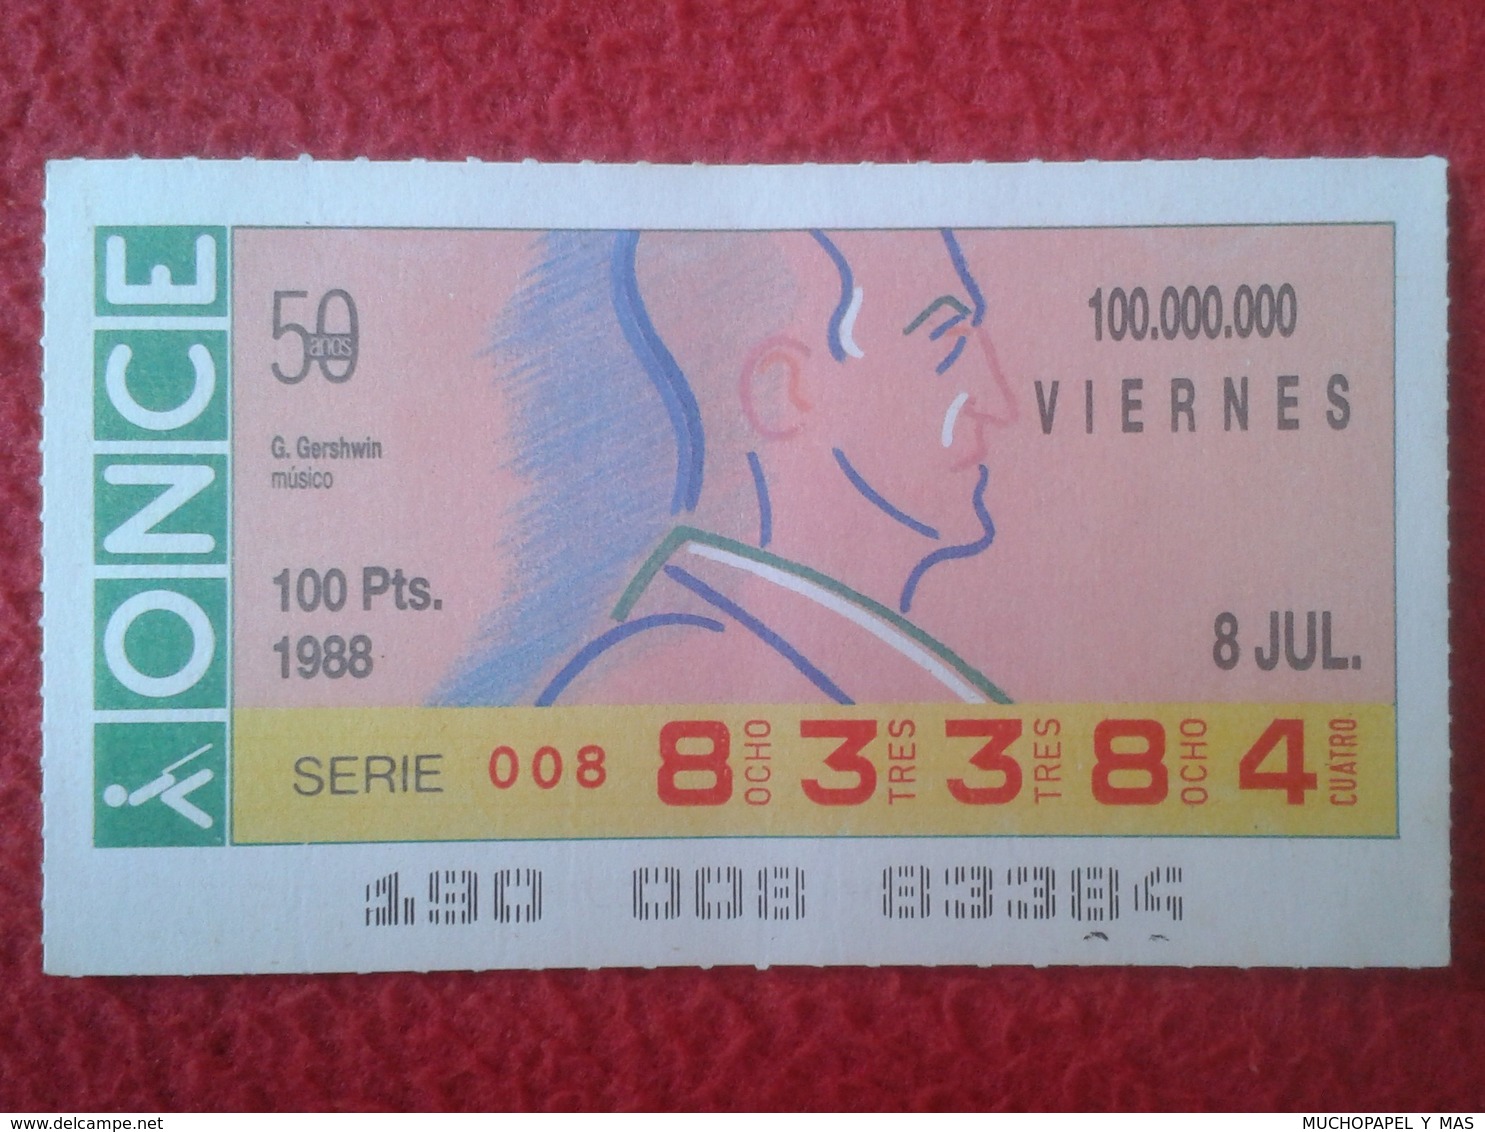 CUPÓN DE ONCE SPANISH LOTTERY CIEGOS SPAIN LOTERÍA BLIND ESPAGNE 1988 MÚSICO MÚSICA CLÁSICA MUSIC GEORGE GERSHWIN VER FO - Billetes De Lotería